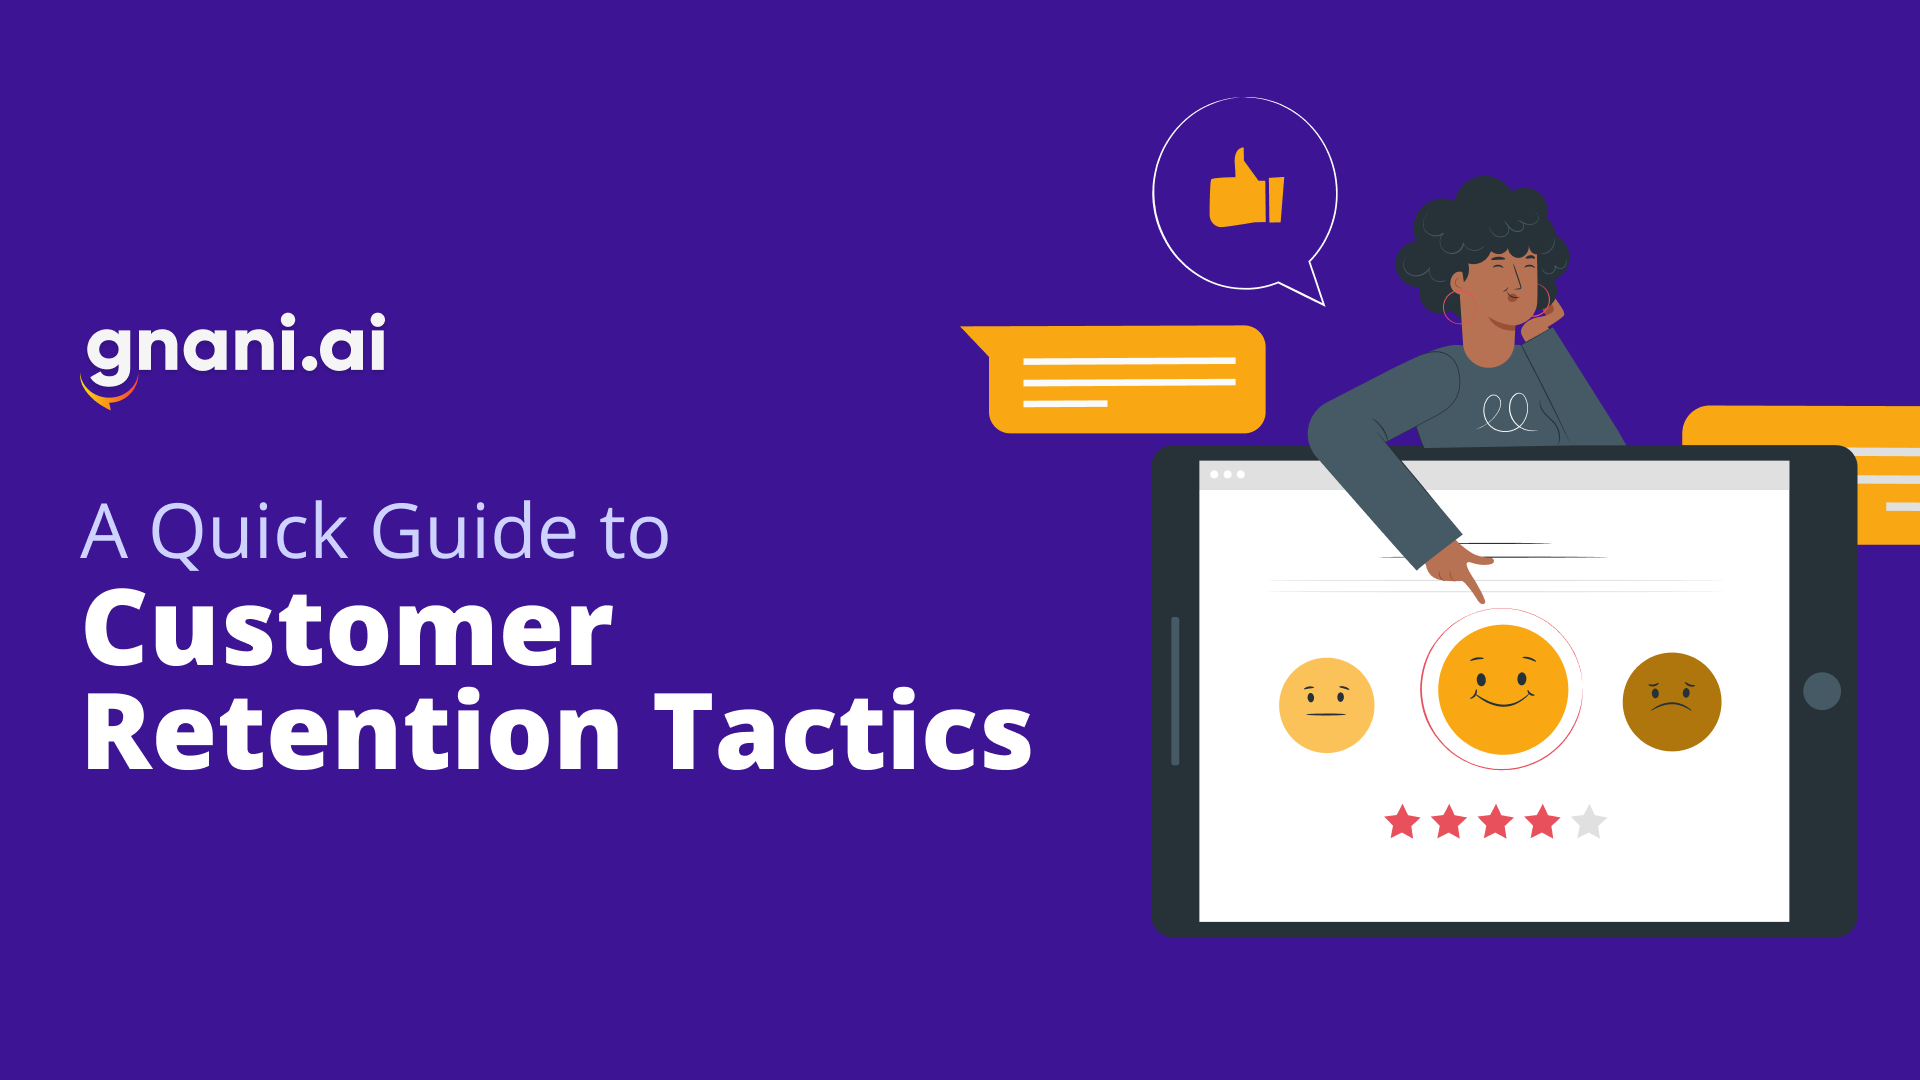 conversational-ai-in-customer-retention-tactics-featured-image